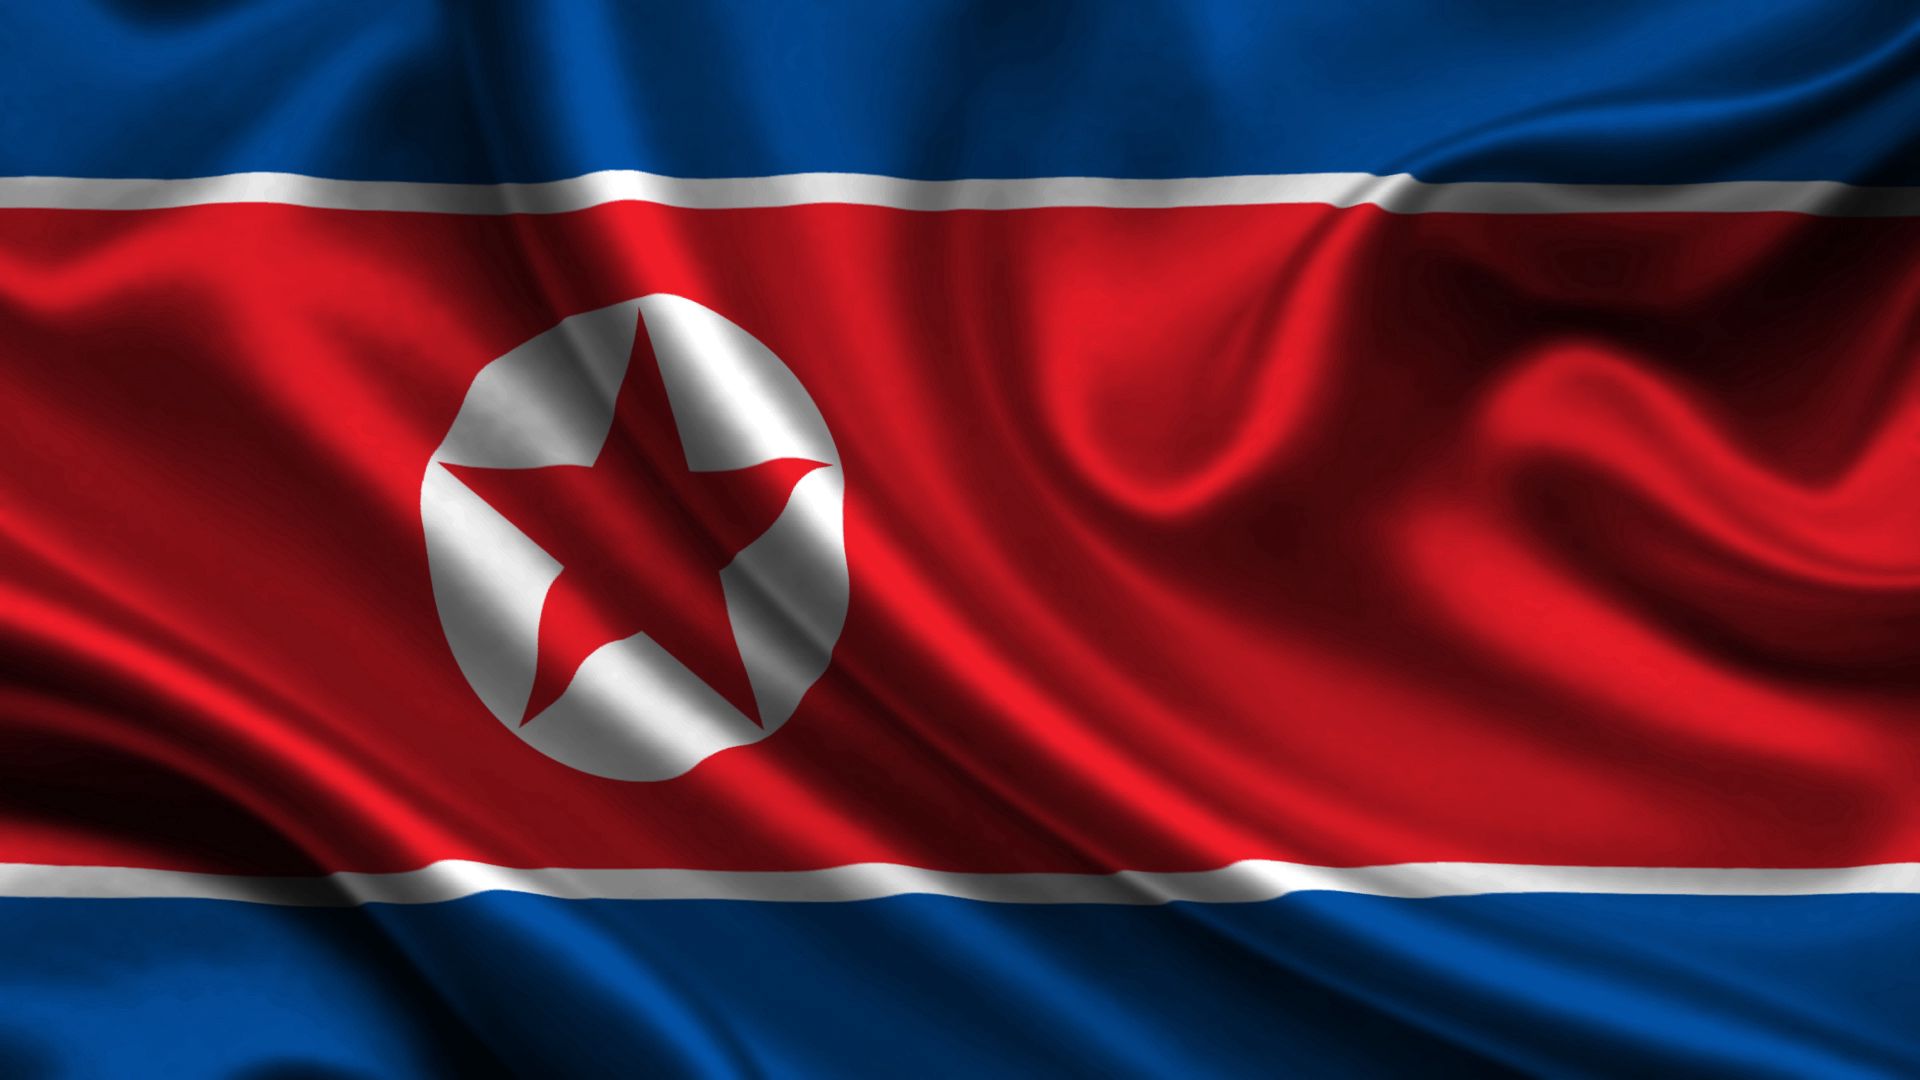 internet, miscellanea, miscellaneous, flag, symbolism, disconnection, shut down, north korea